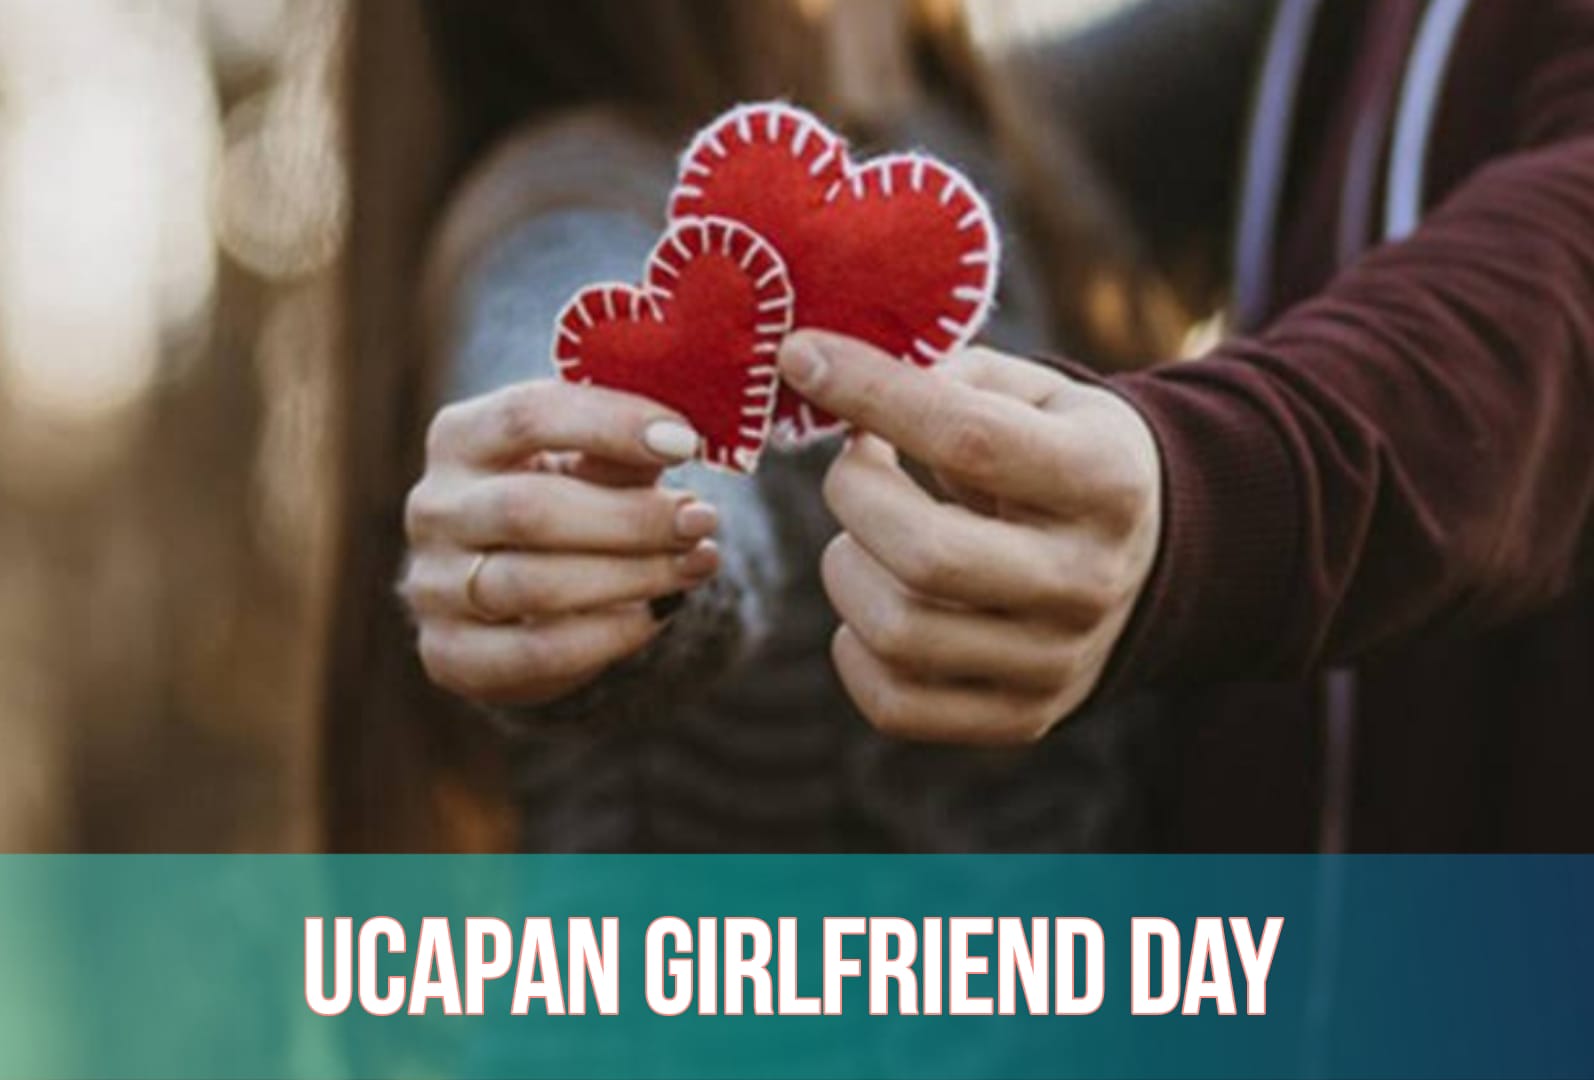 10 Ucapan Girlfriend Day dalam Bahasa Inggris Beserta Artinya,  Romantis dan Penuh Makna untuk Pacar Tercinta